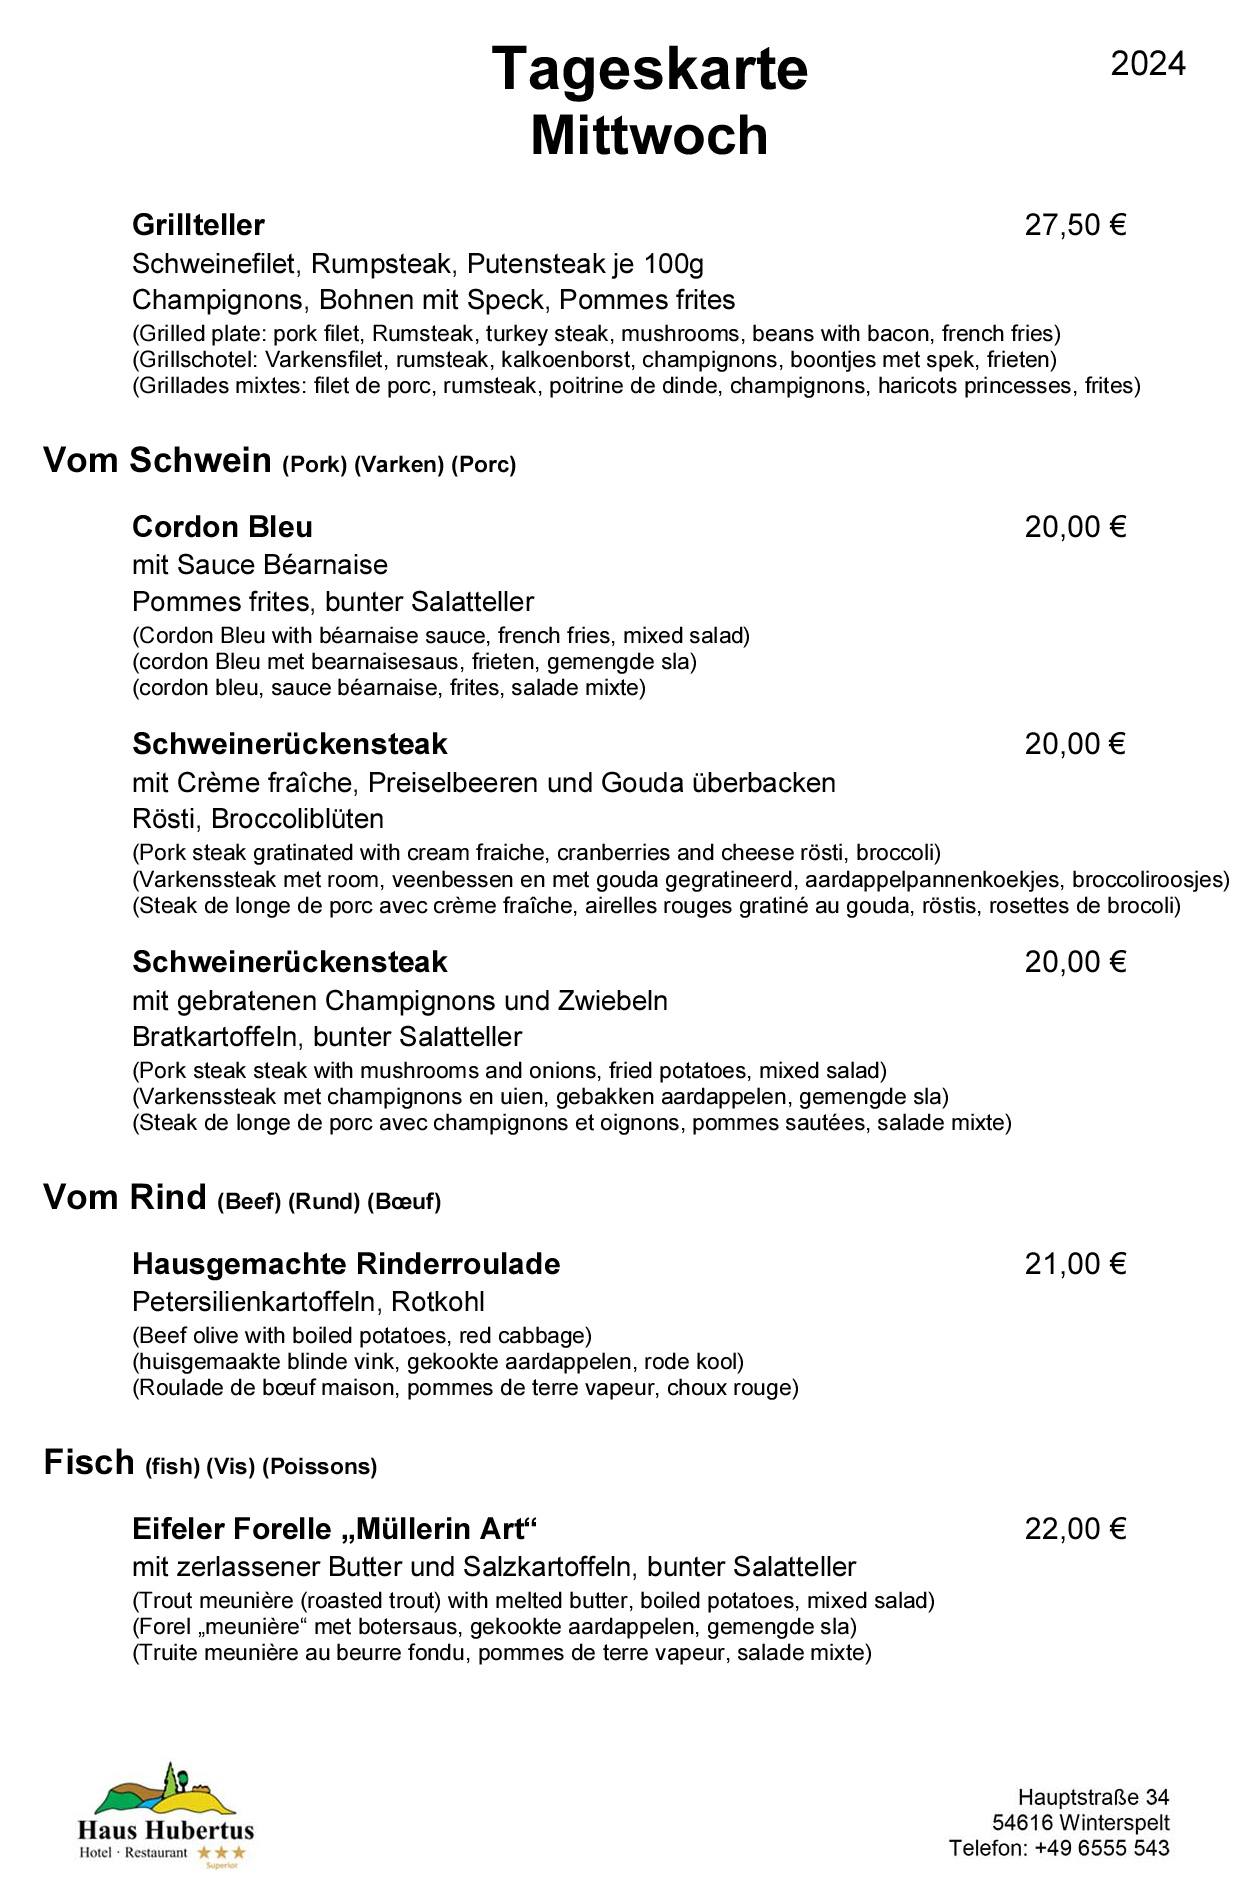 Hotel - Restaurant Haus Hubertus - Menu 01/2024 - Menu van de dag / Mittwoch